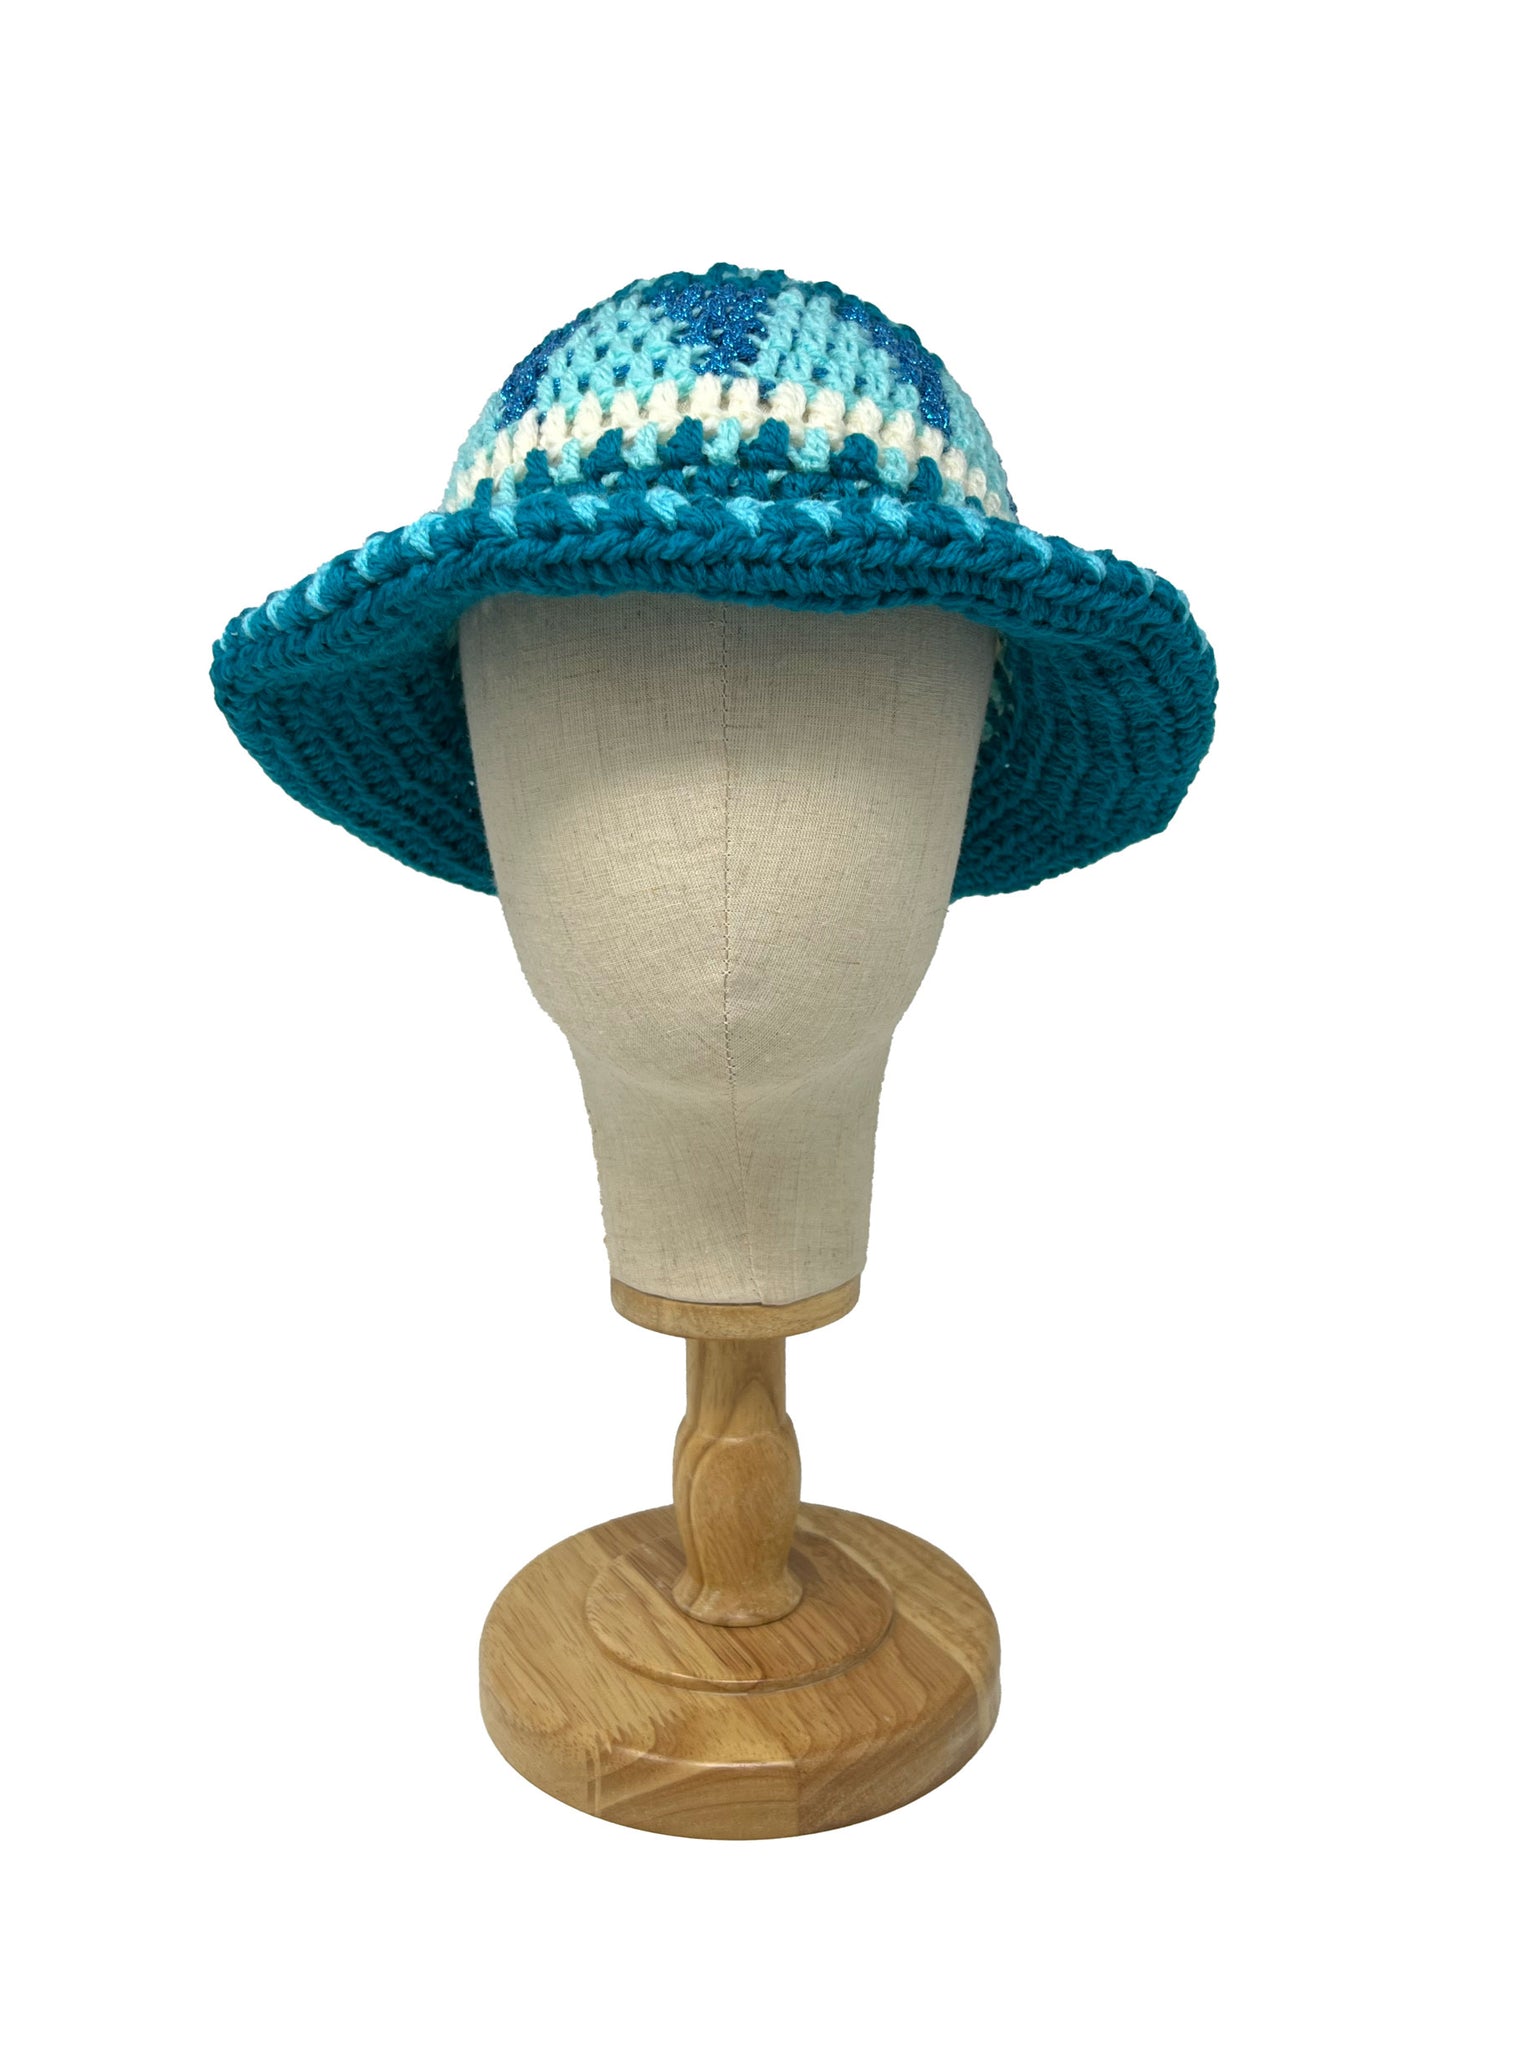 Turquoise and light blue ethnic wool crochet bucket hat